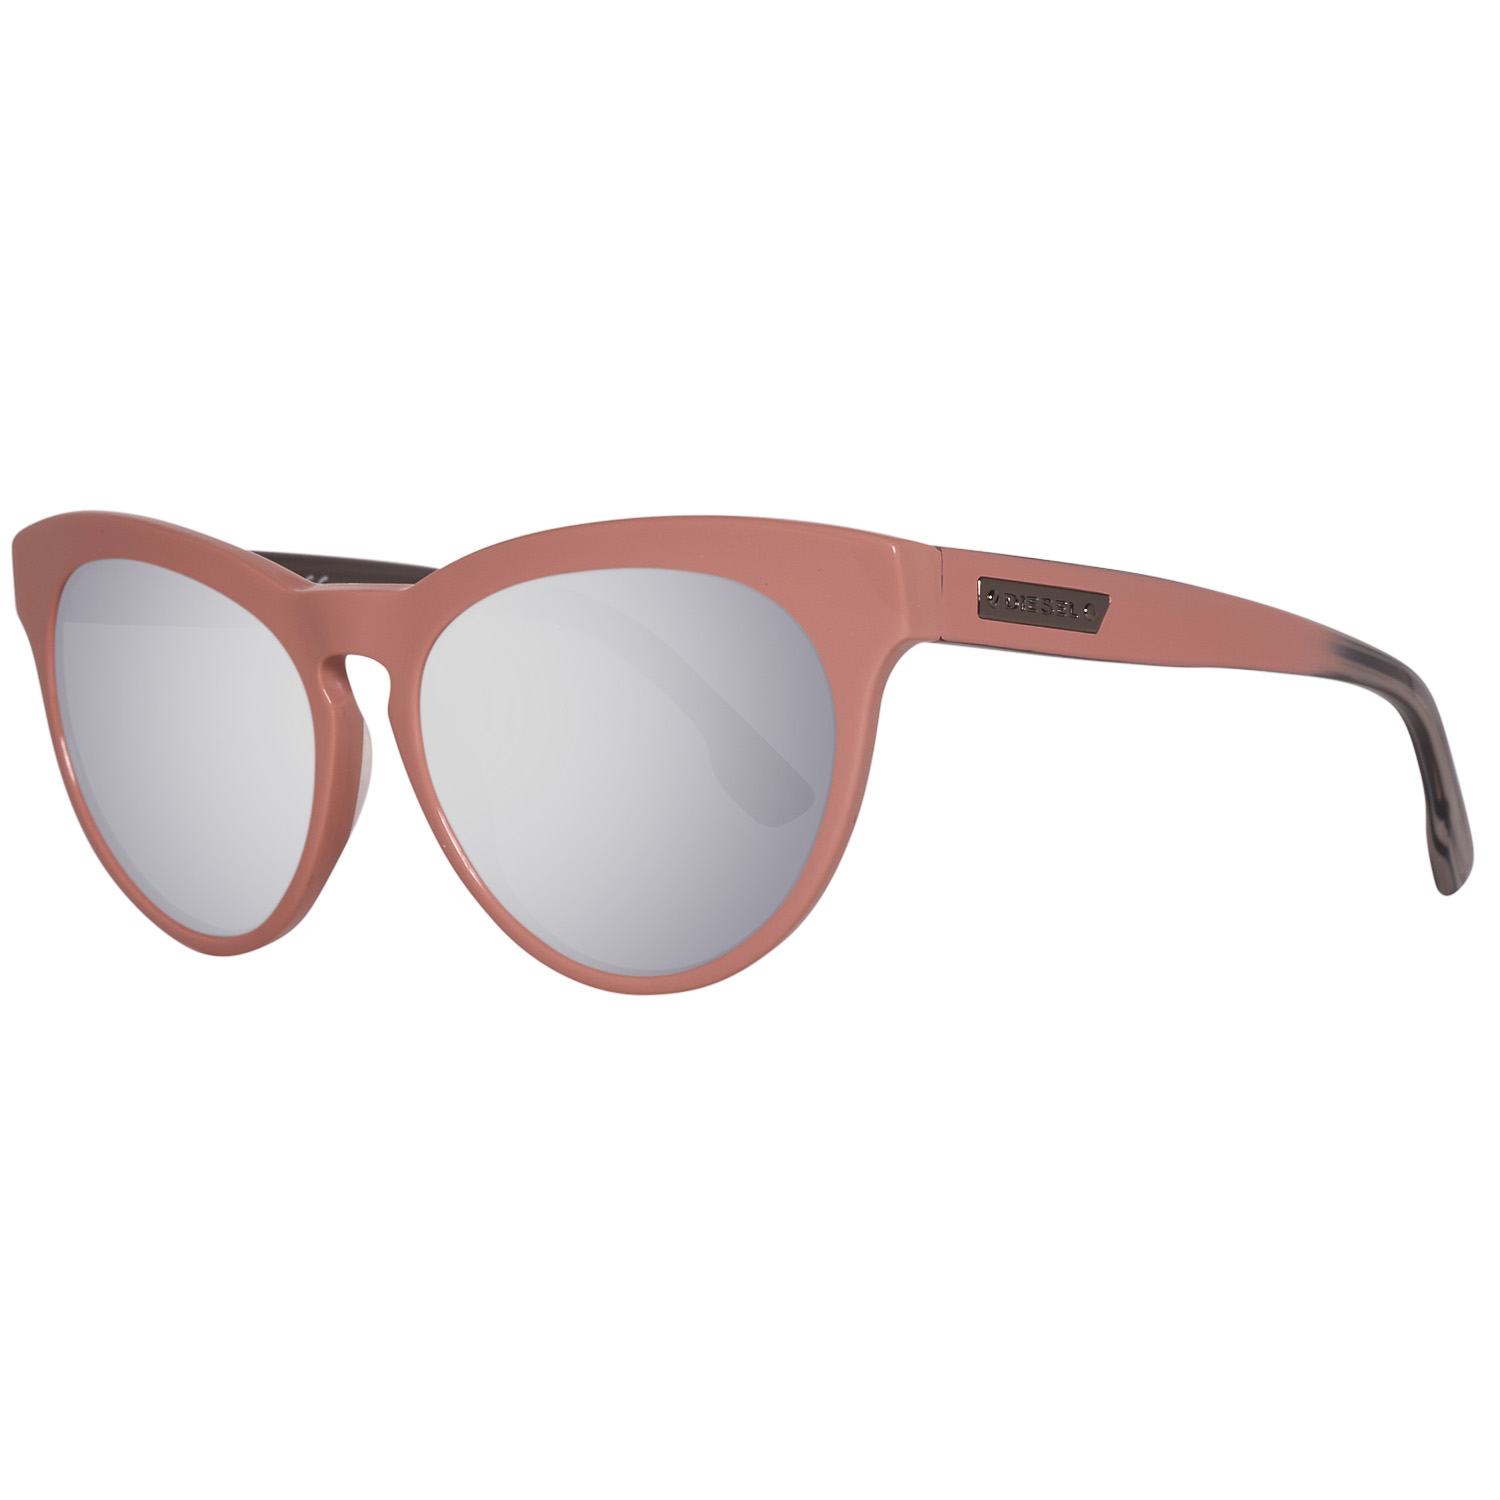 Diesel Sunglasses DL0150 72C 56